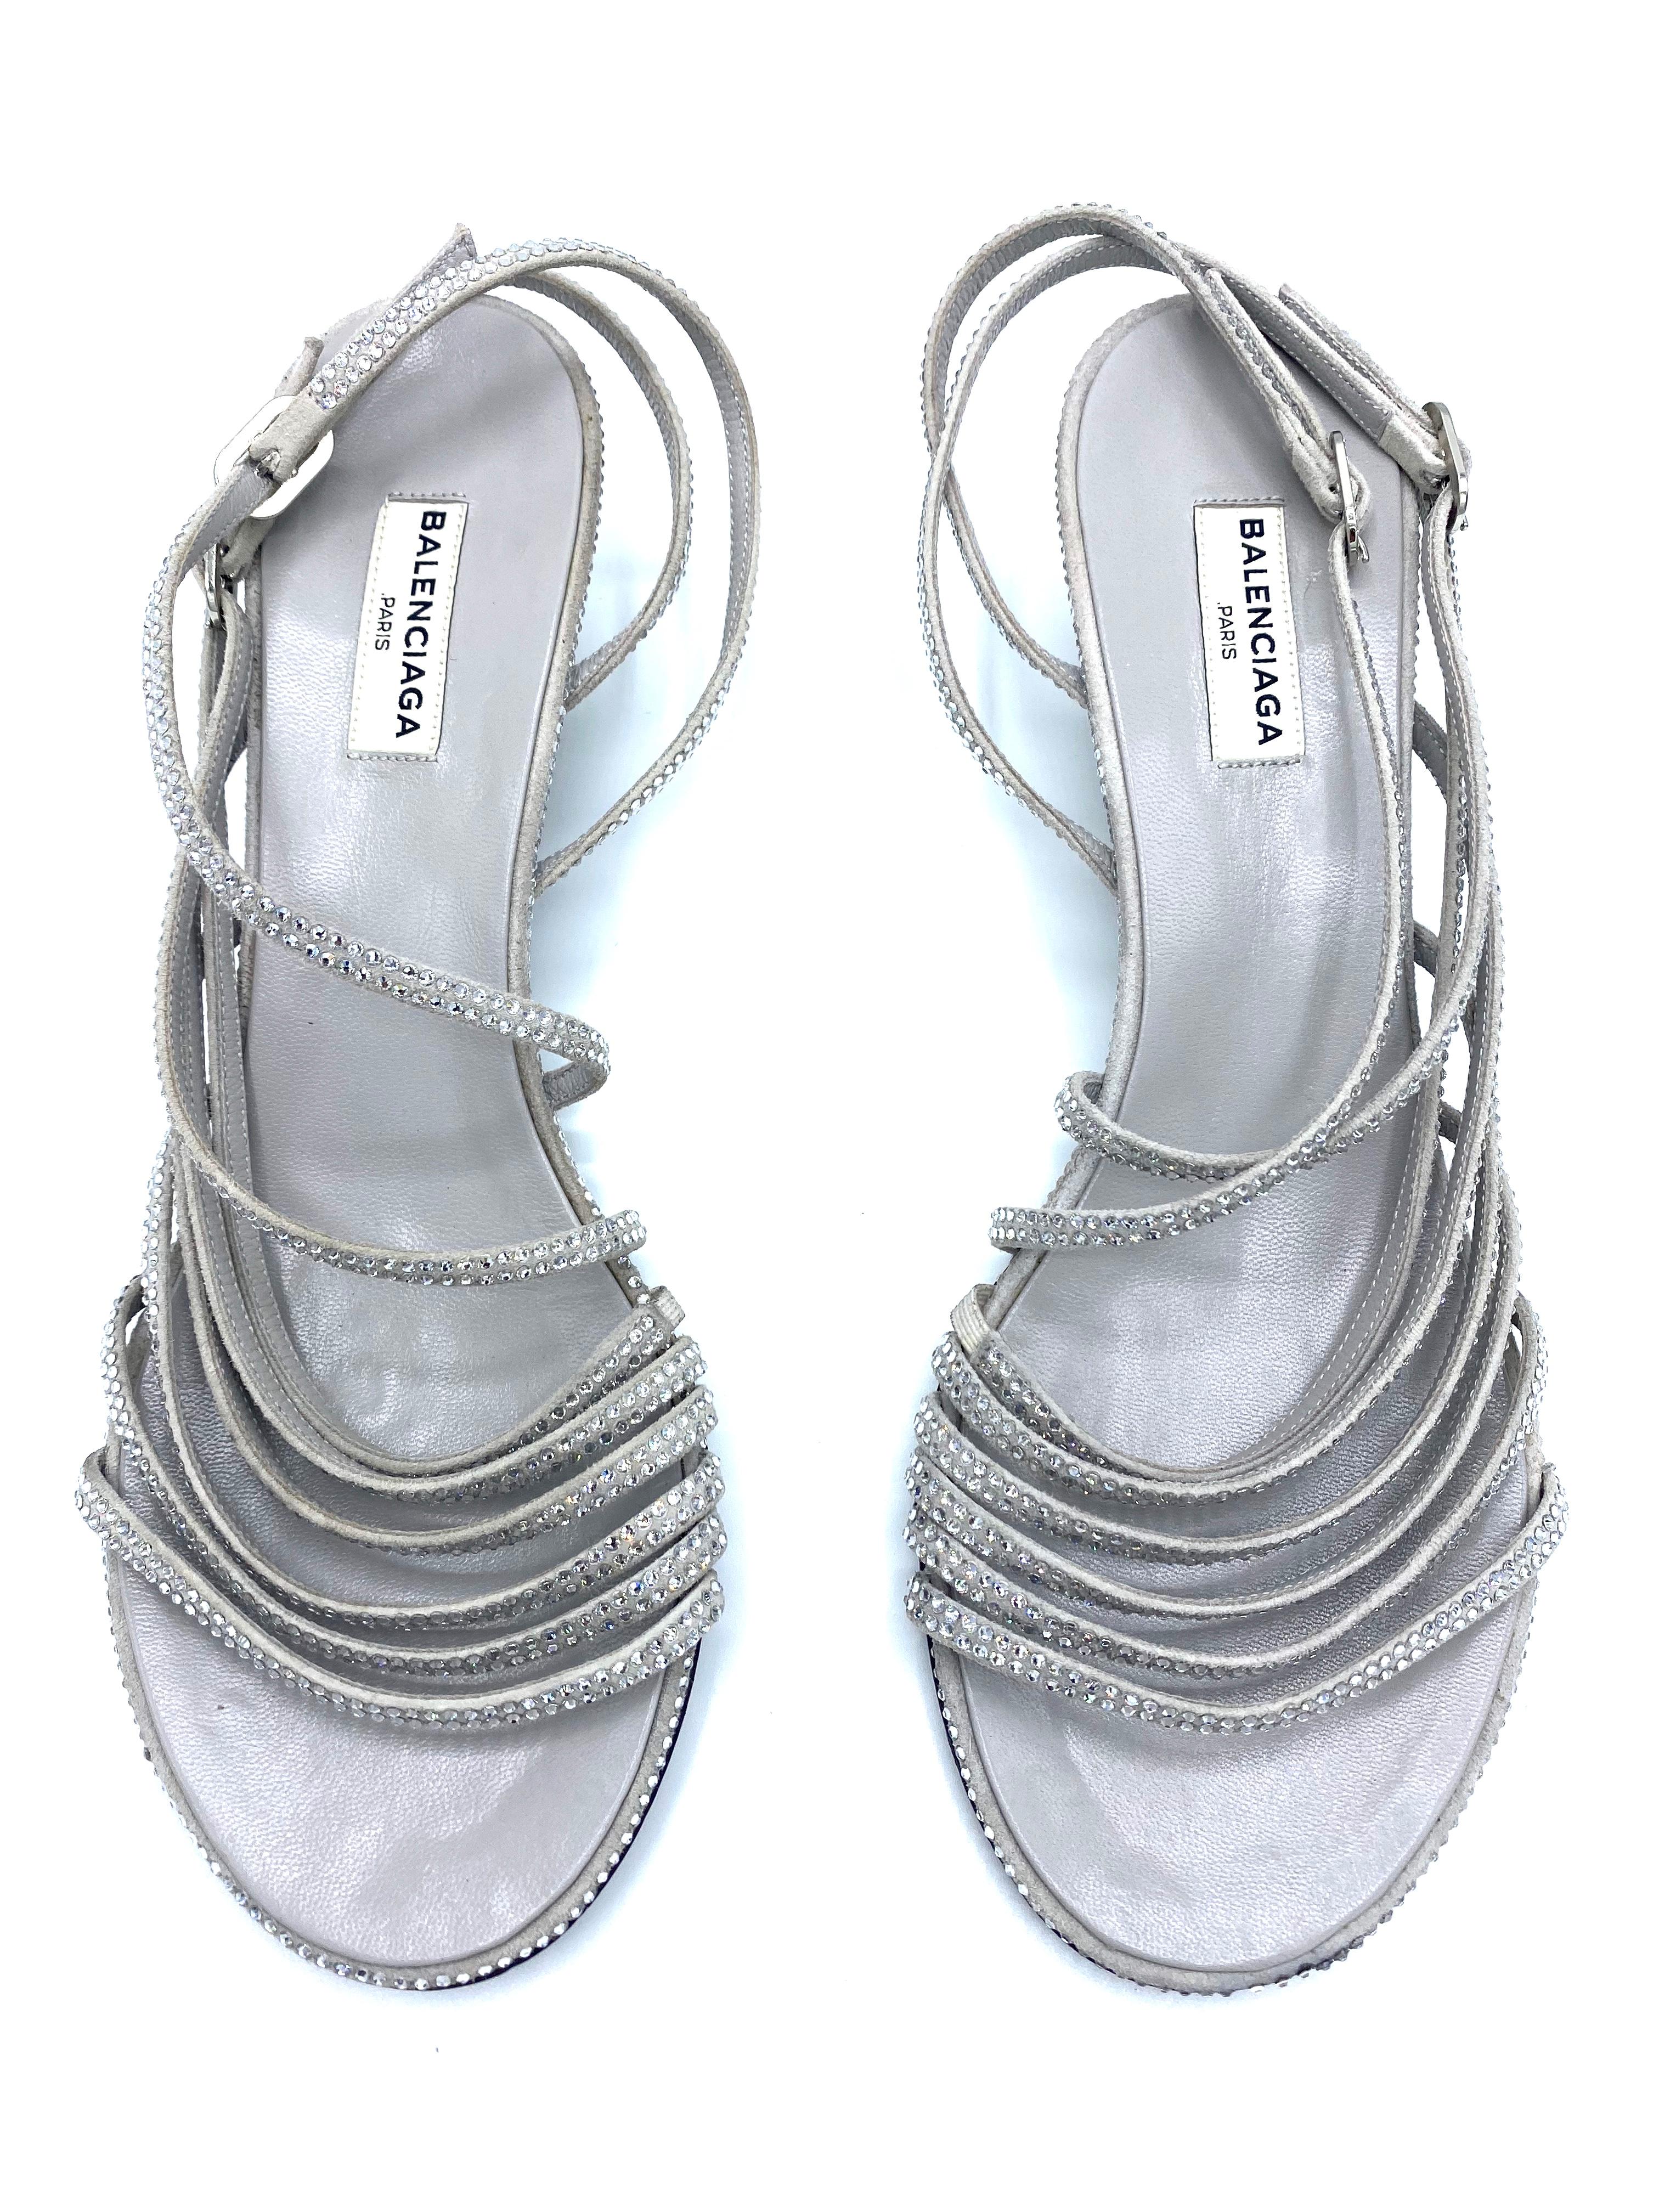 Balenciaga Crystal Embellished Grey Suede Strappy Heels Sandals Size 39  4